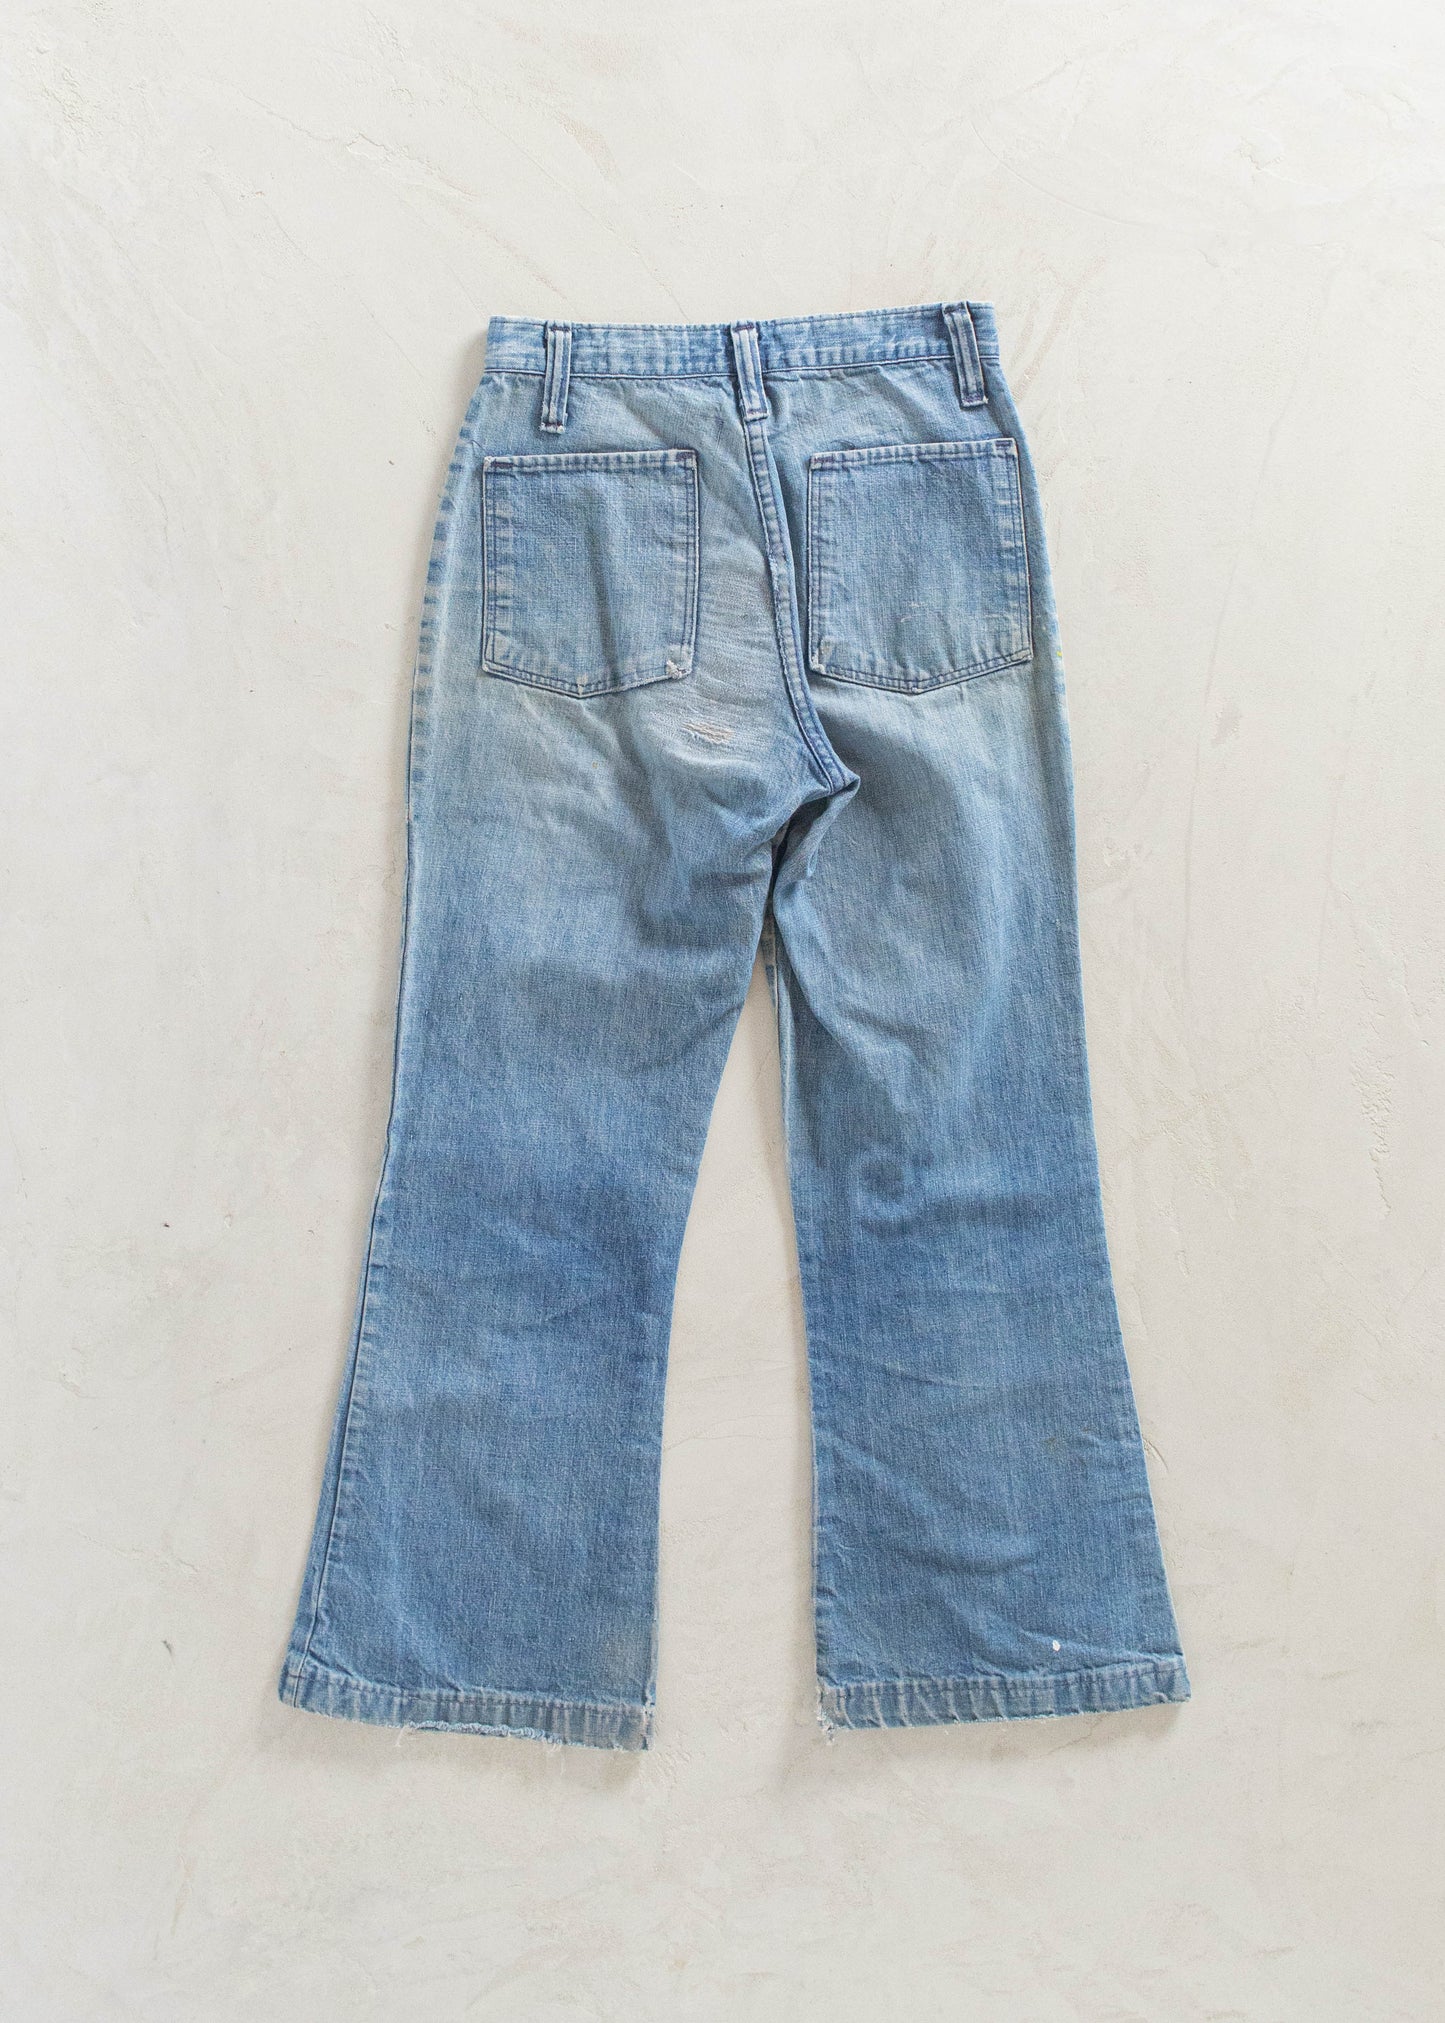 Vintage 1970s Live INS Lightwash Flare Jeans Size Women's 24